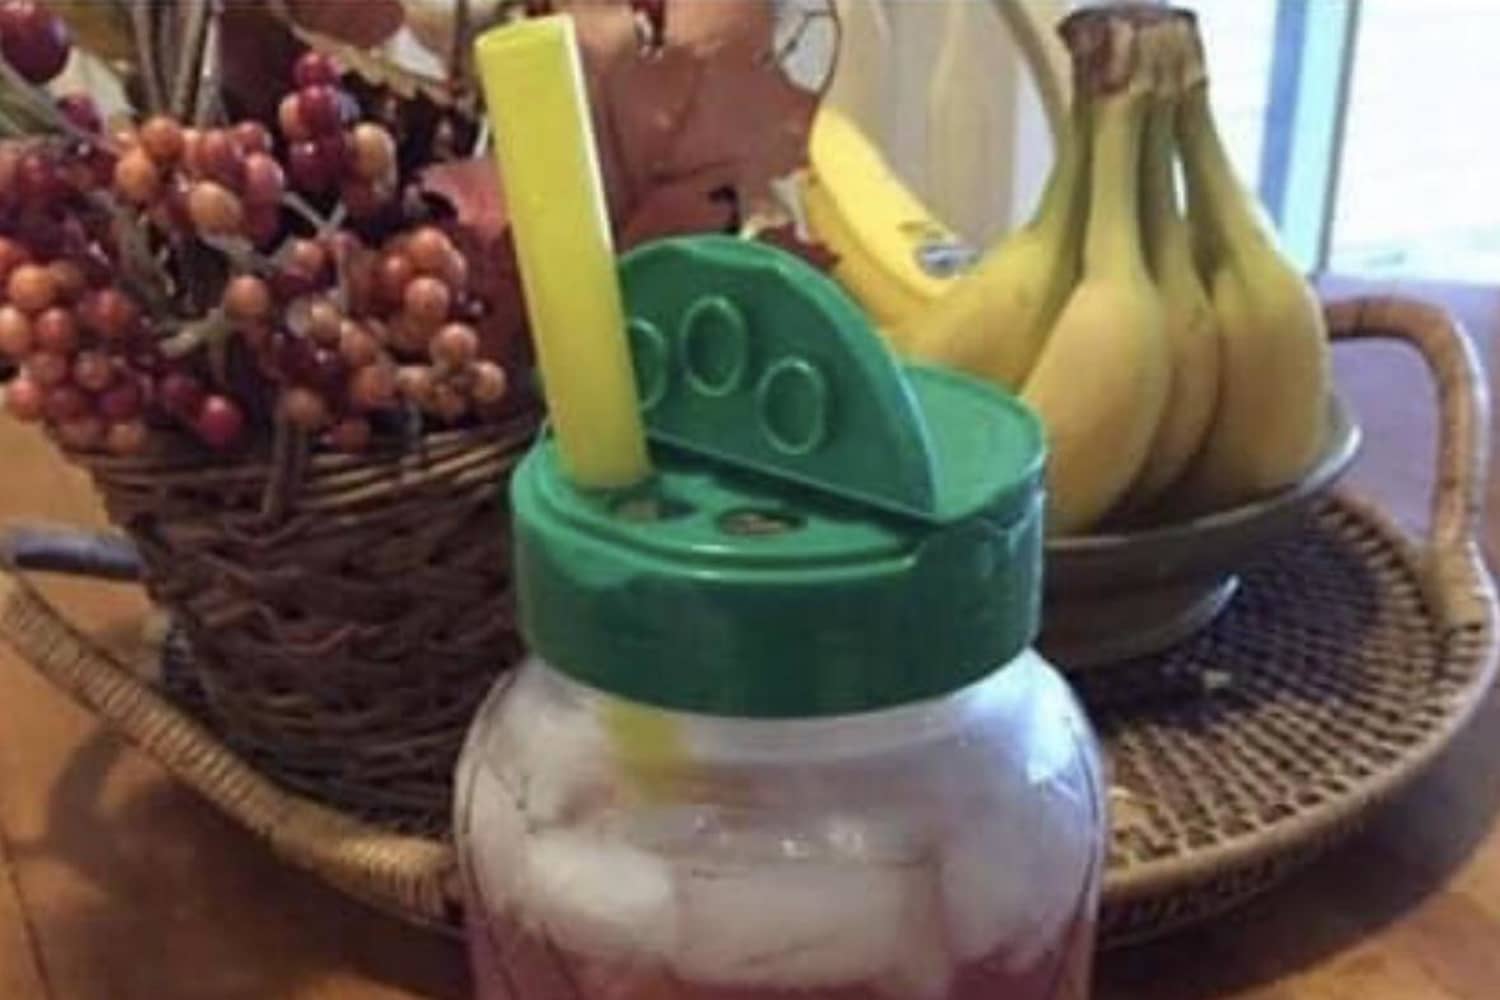 Easy Mason Jar DIY: Parmesan Cheese Container! – Stuff Parents Need